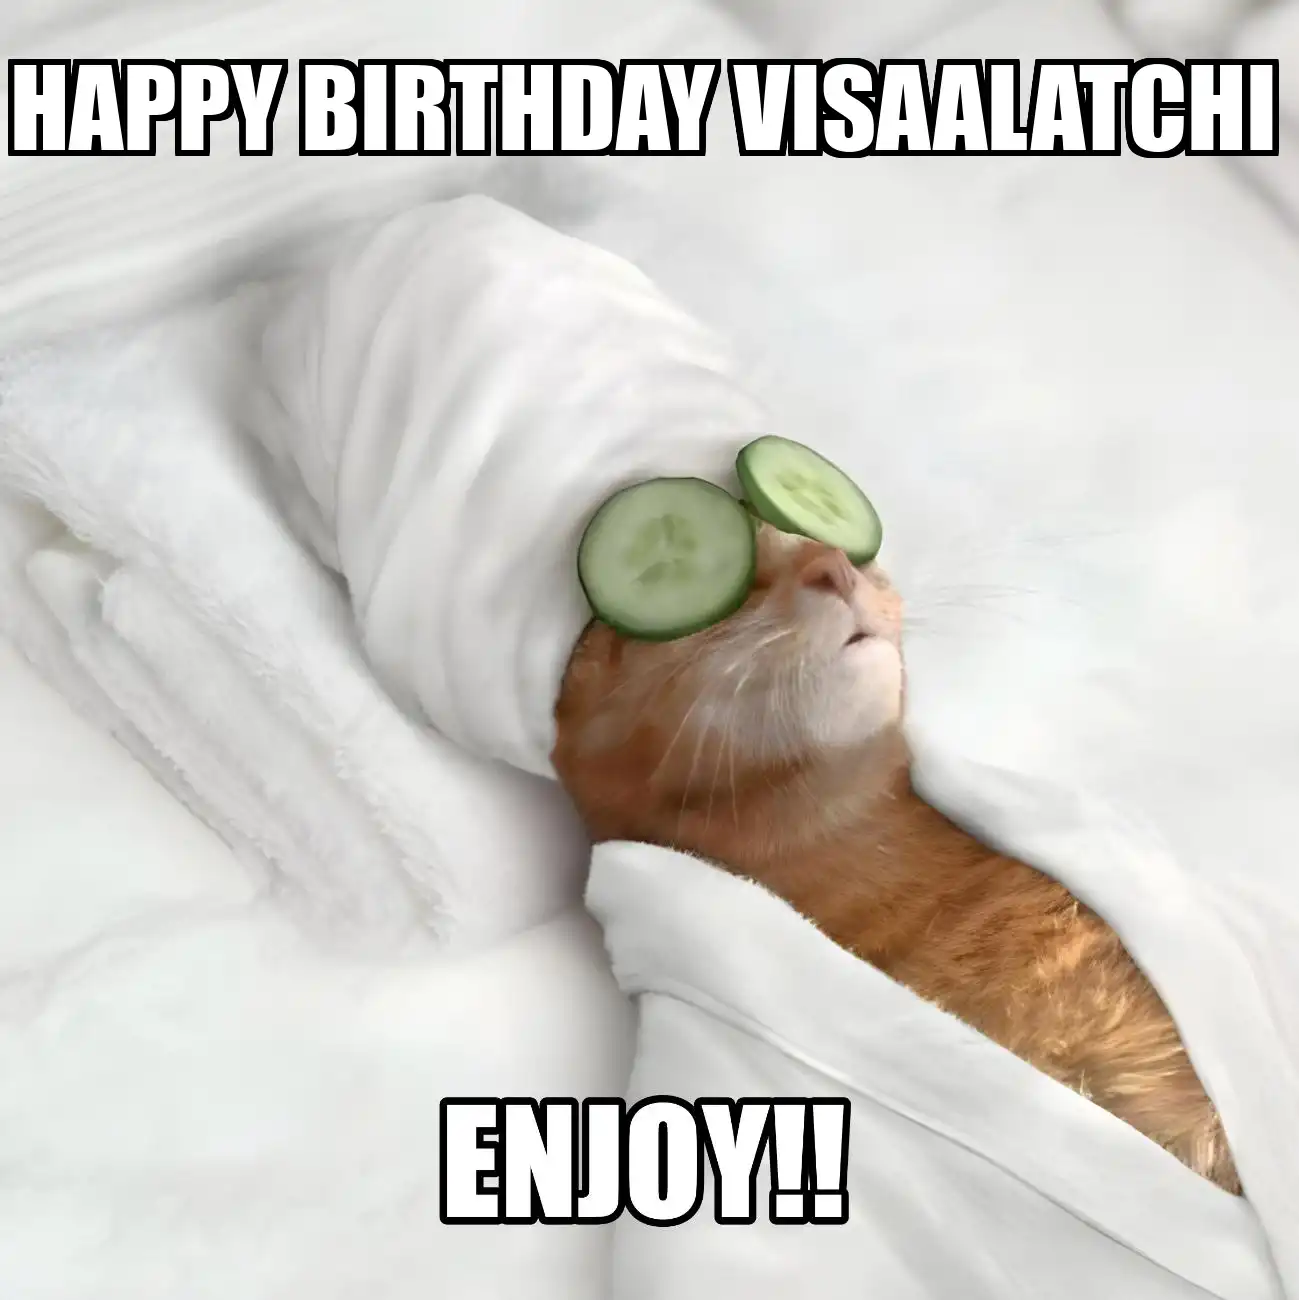 Happy Birthday Visaalatchi Enjoy Cat Meme